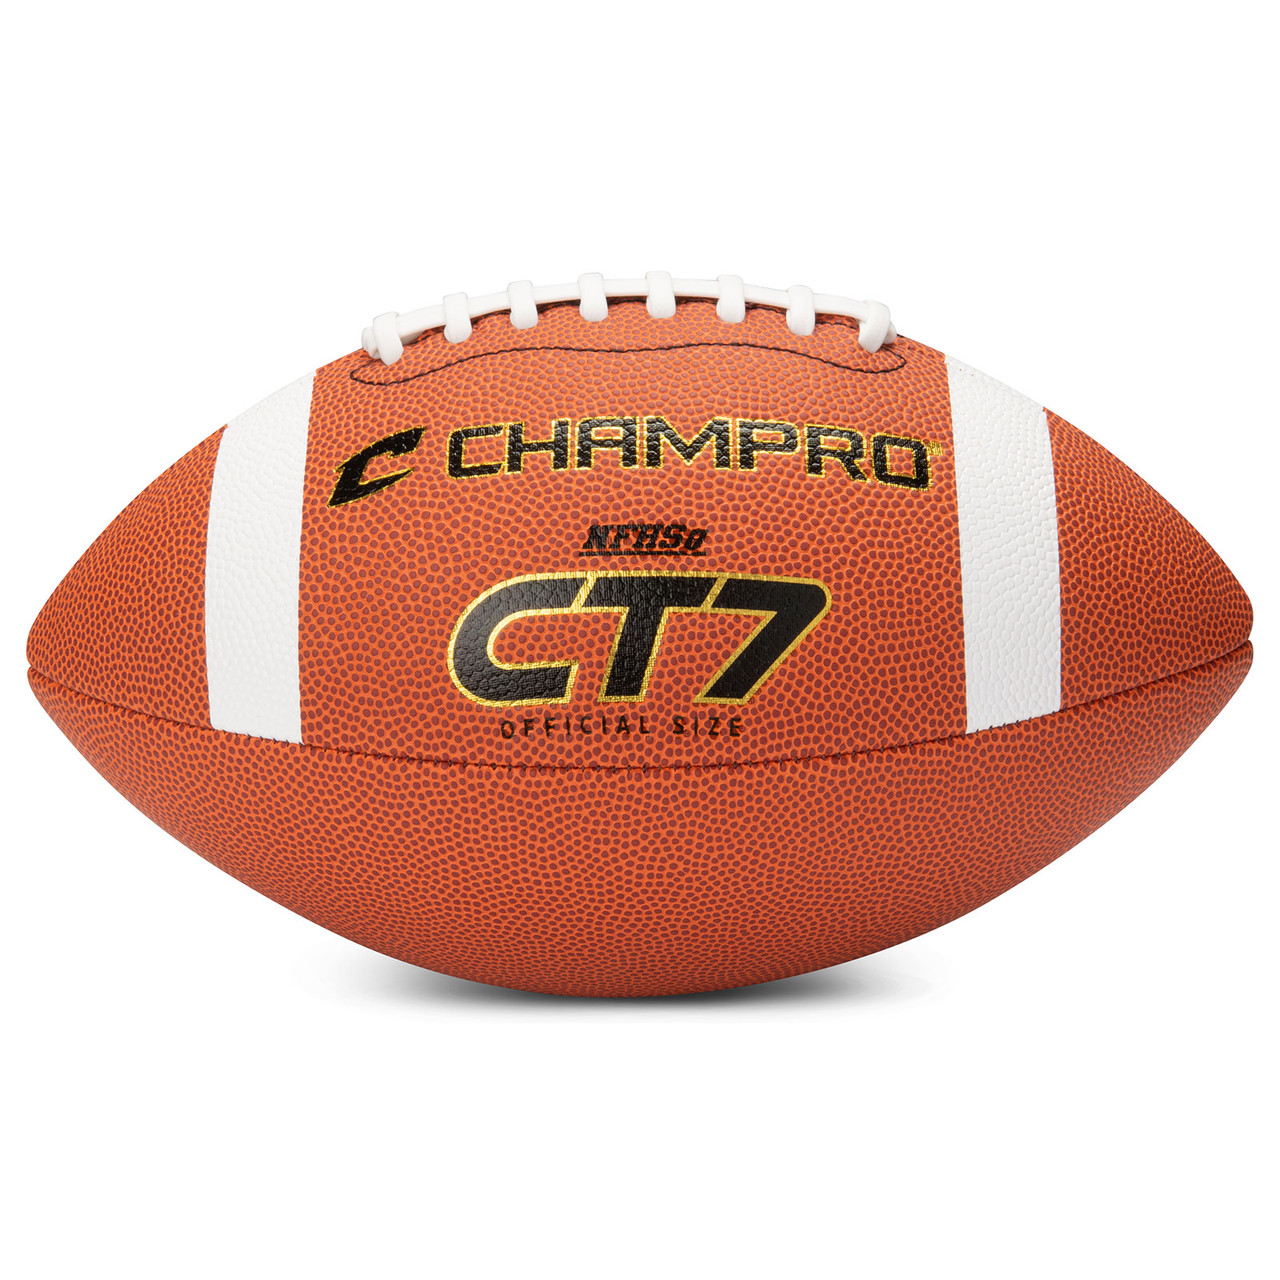 Champro Sports CT7 Advanced Composite Football